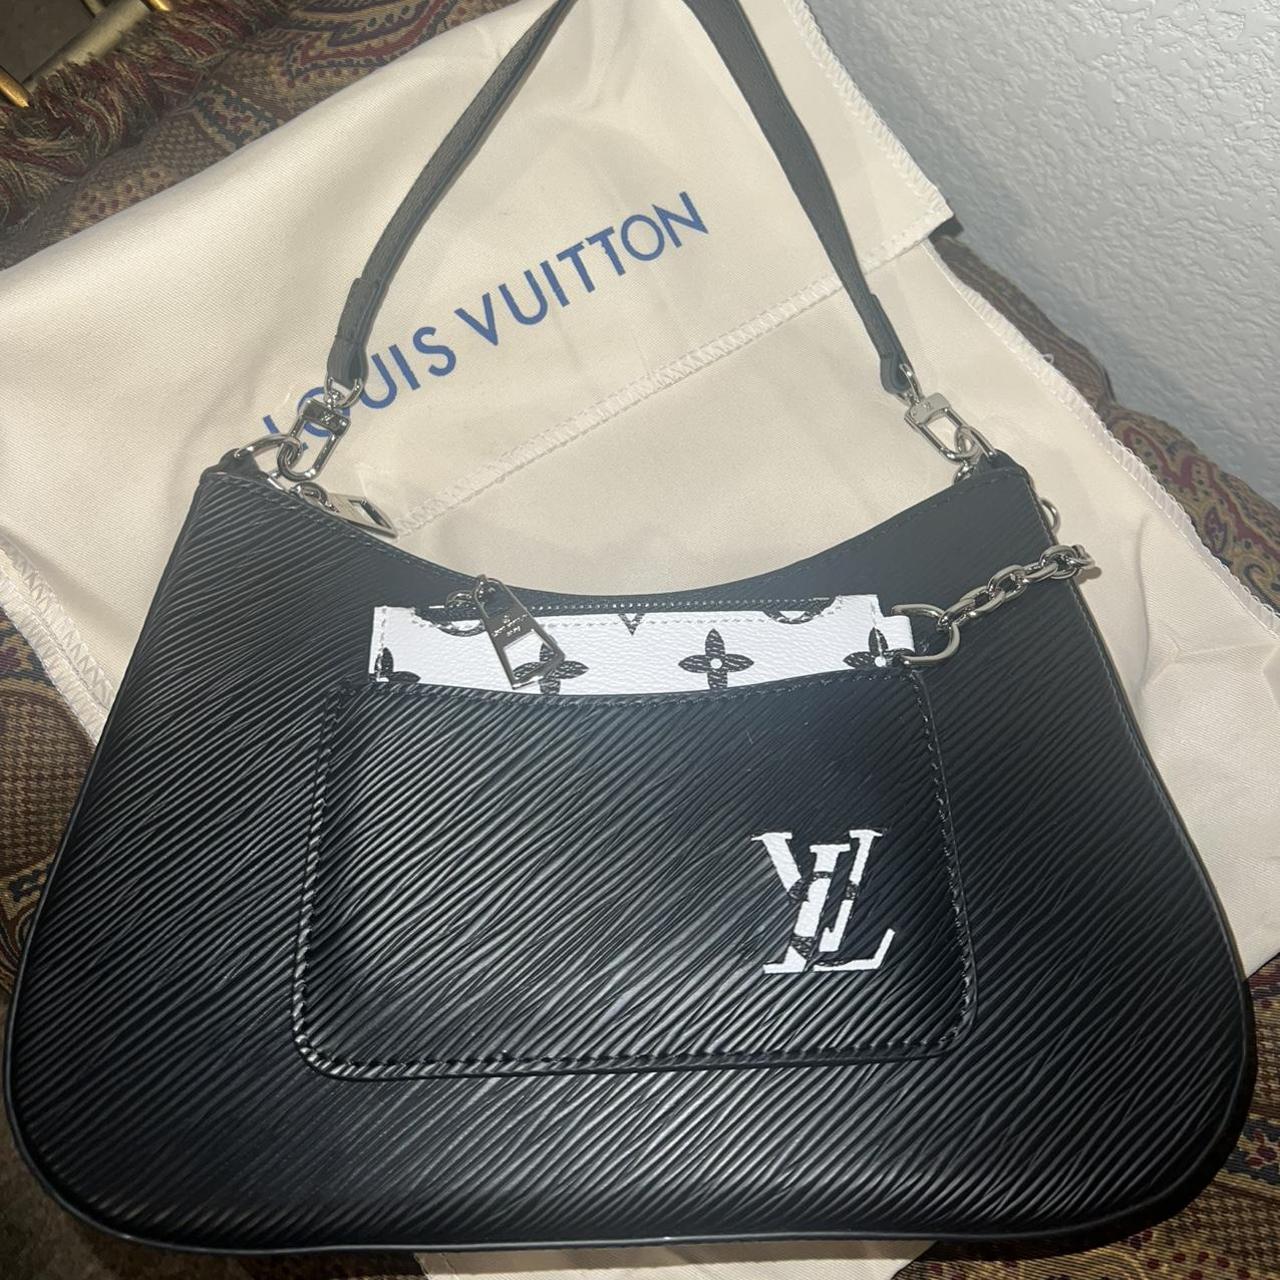 Marelle Epi Leather - Handbags